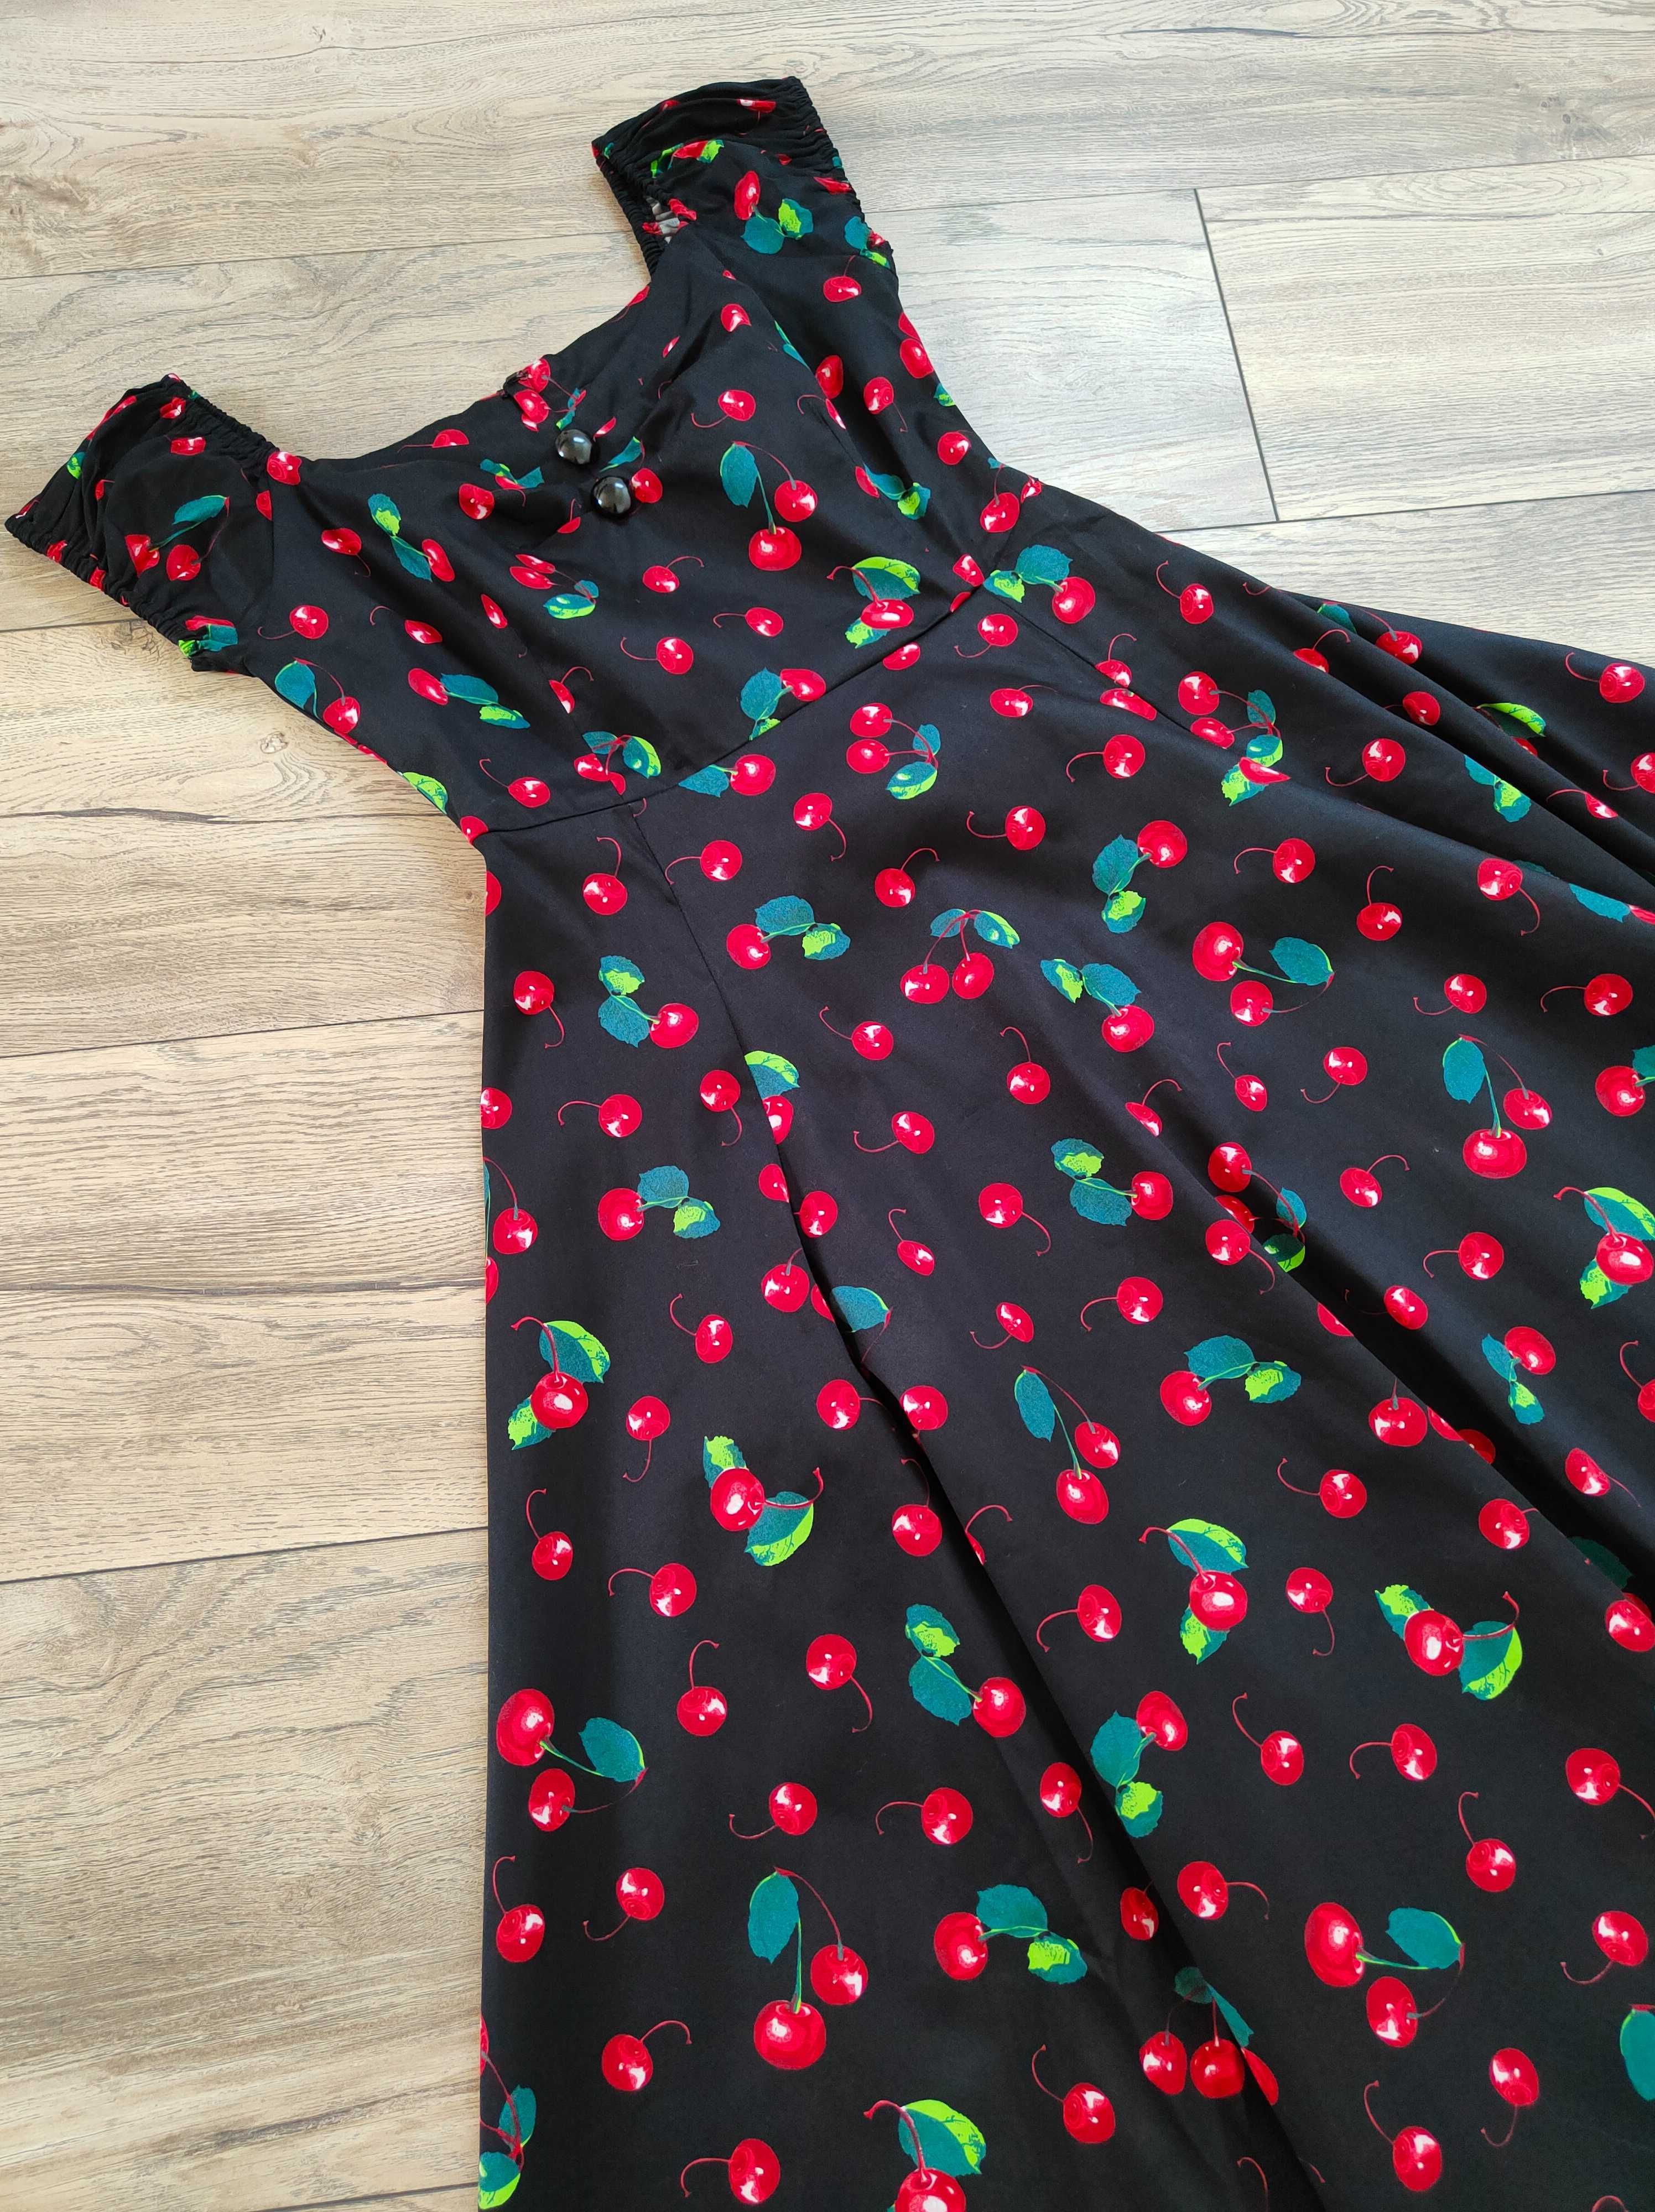 Piękna sukienka w wiśnie Collectif Dolores 50's Cherry Vintage Retro